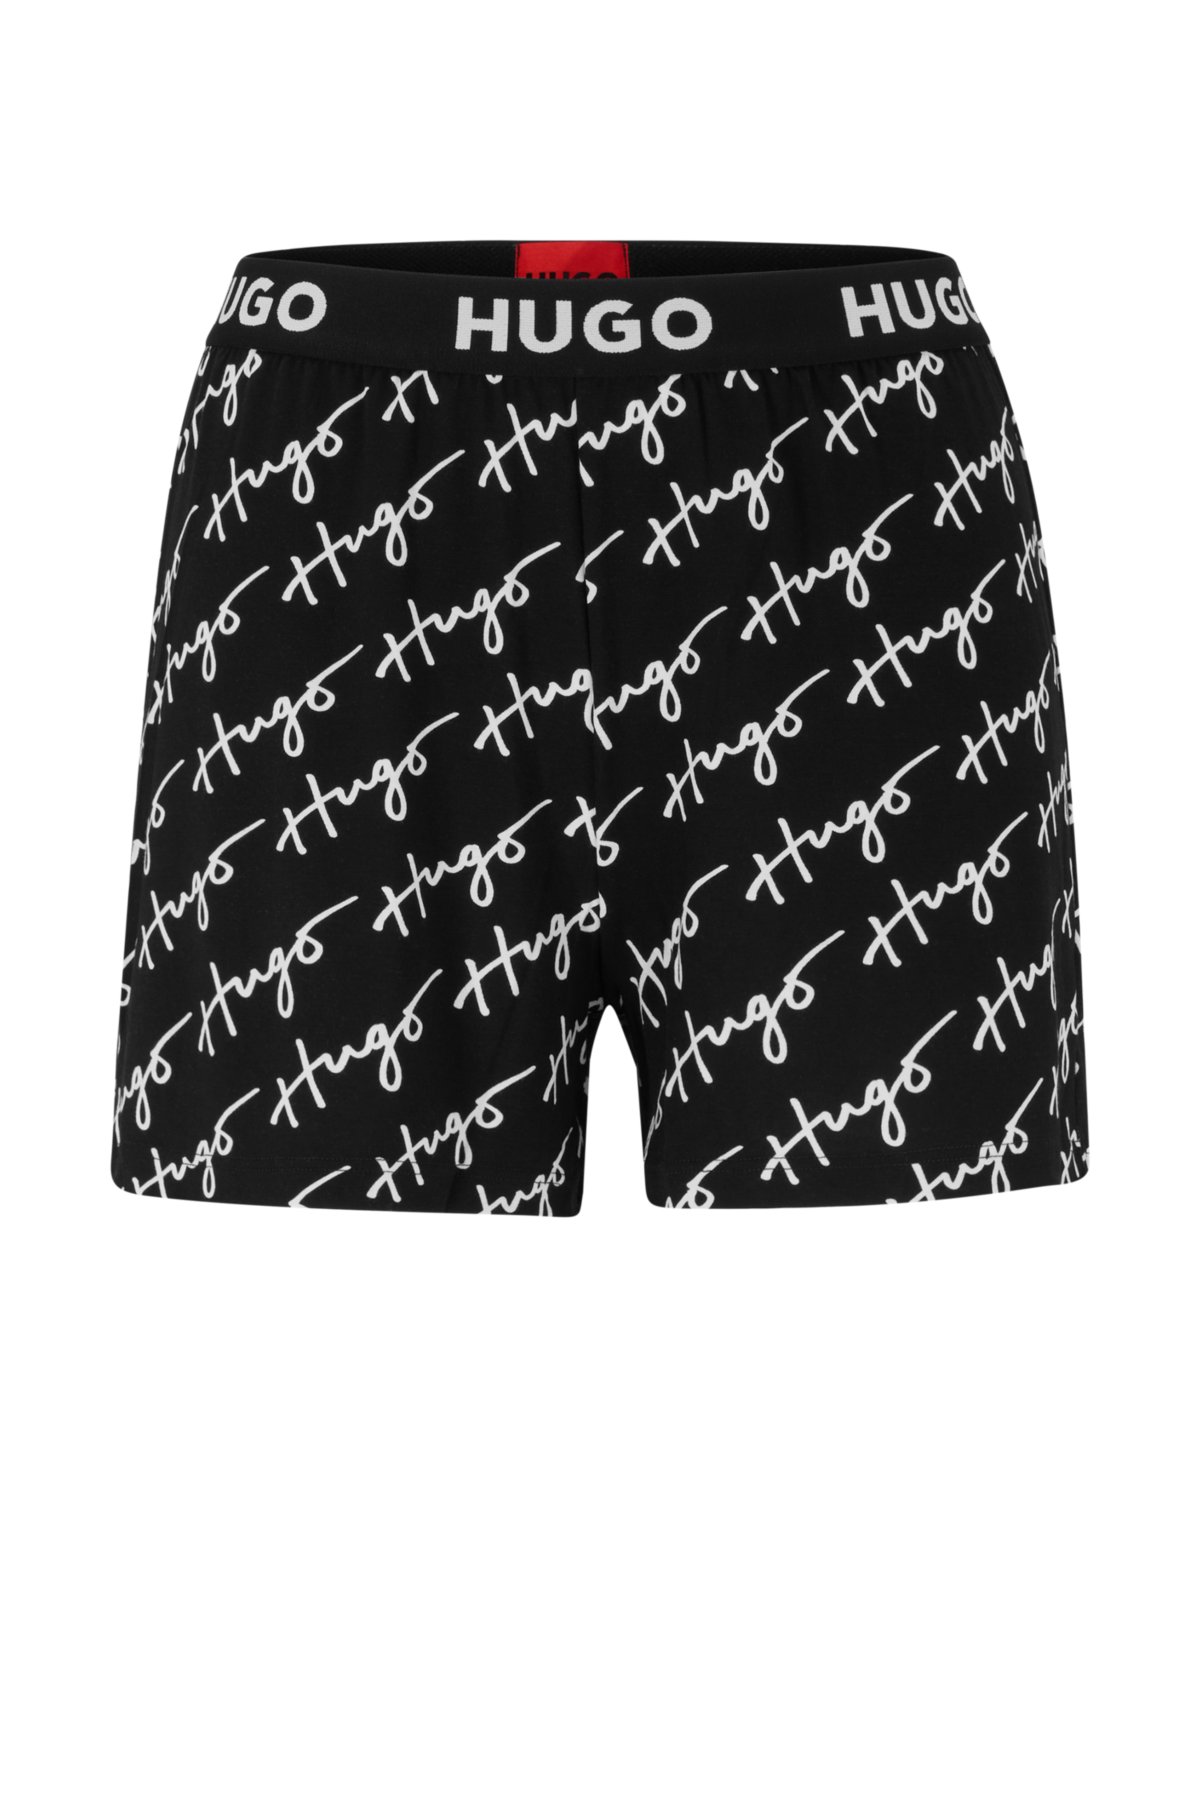 HUGO - Jersey shorts pajama with logos original handwritten and